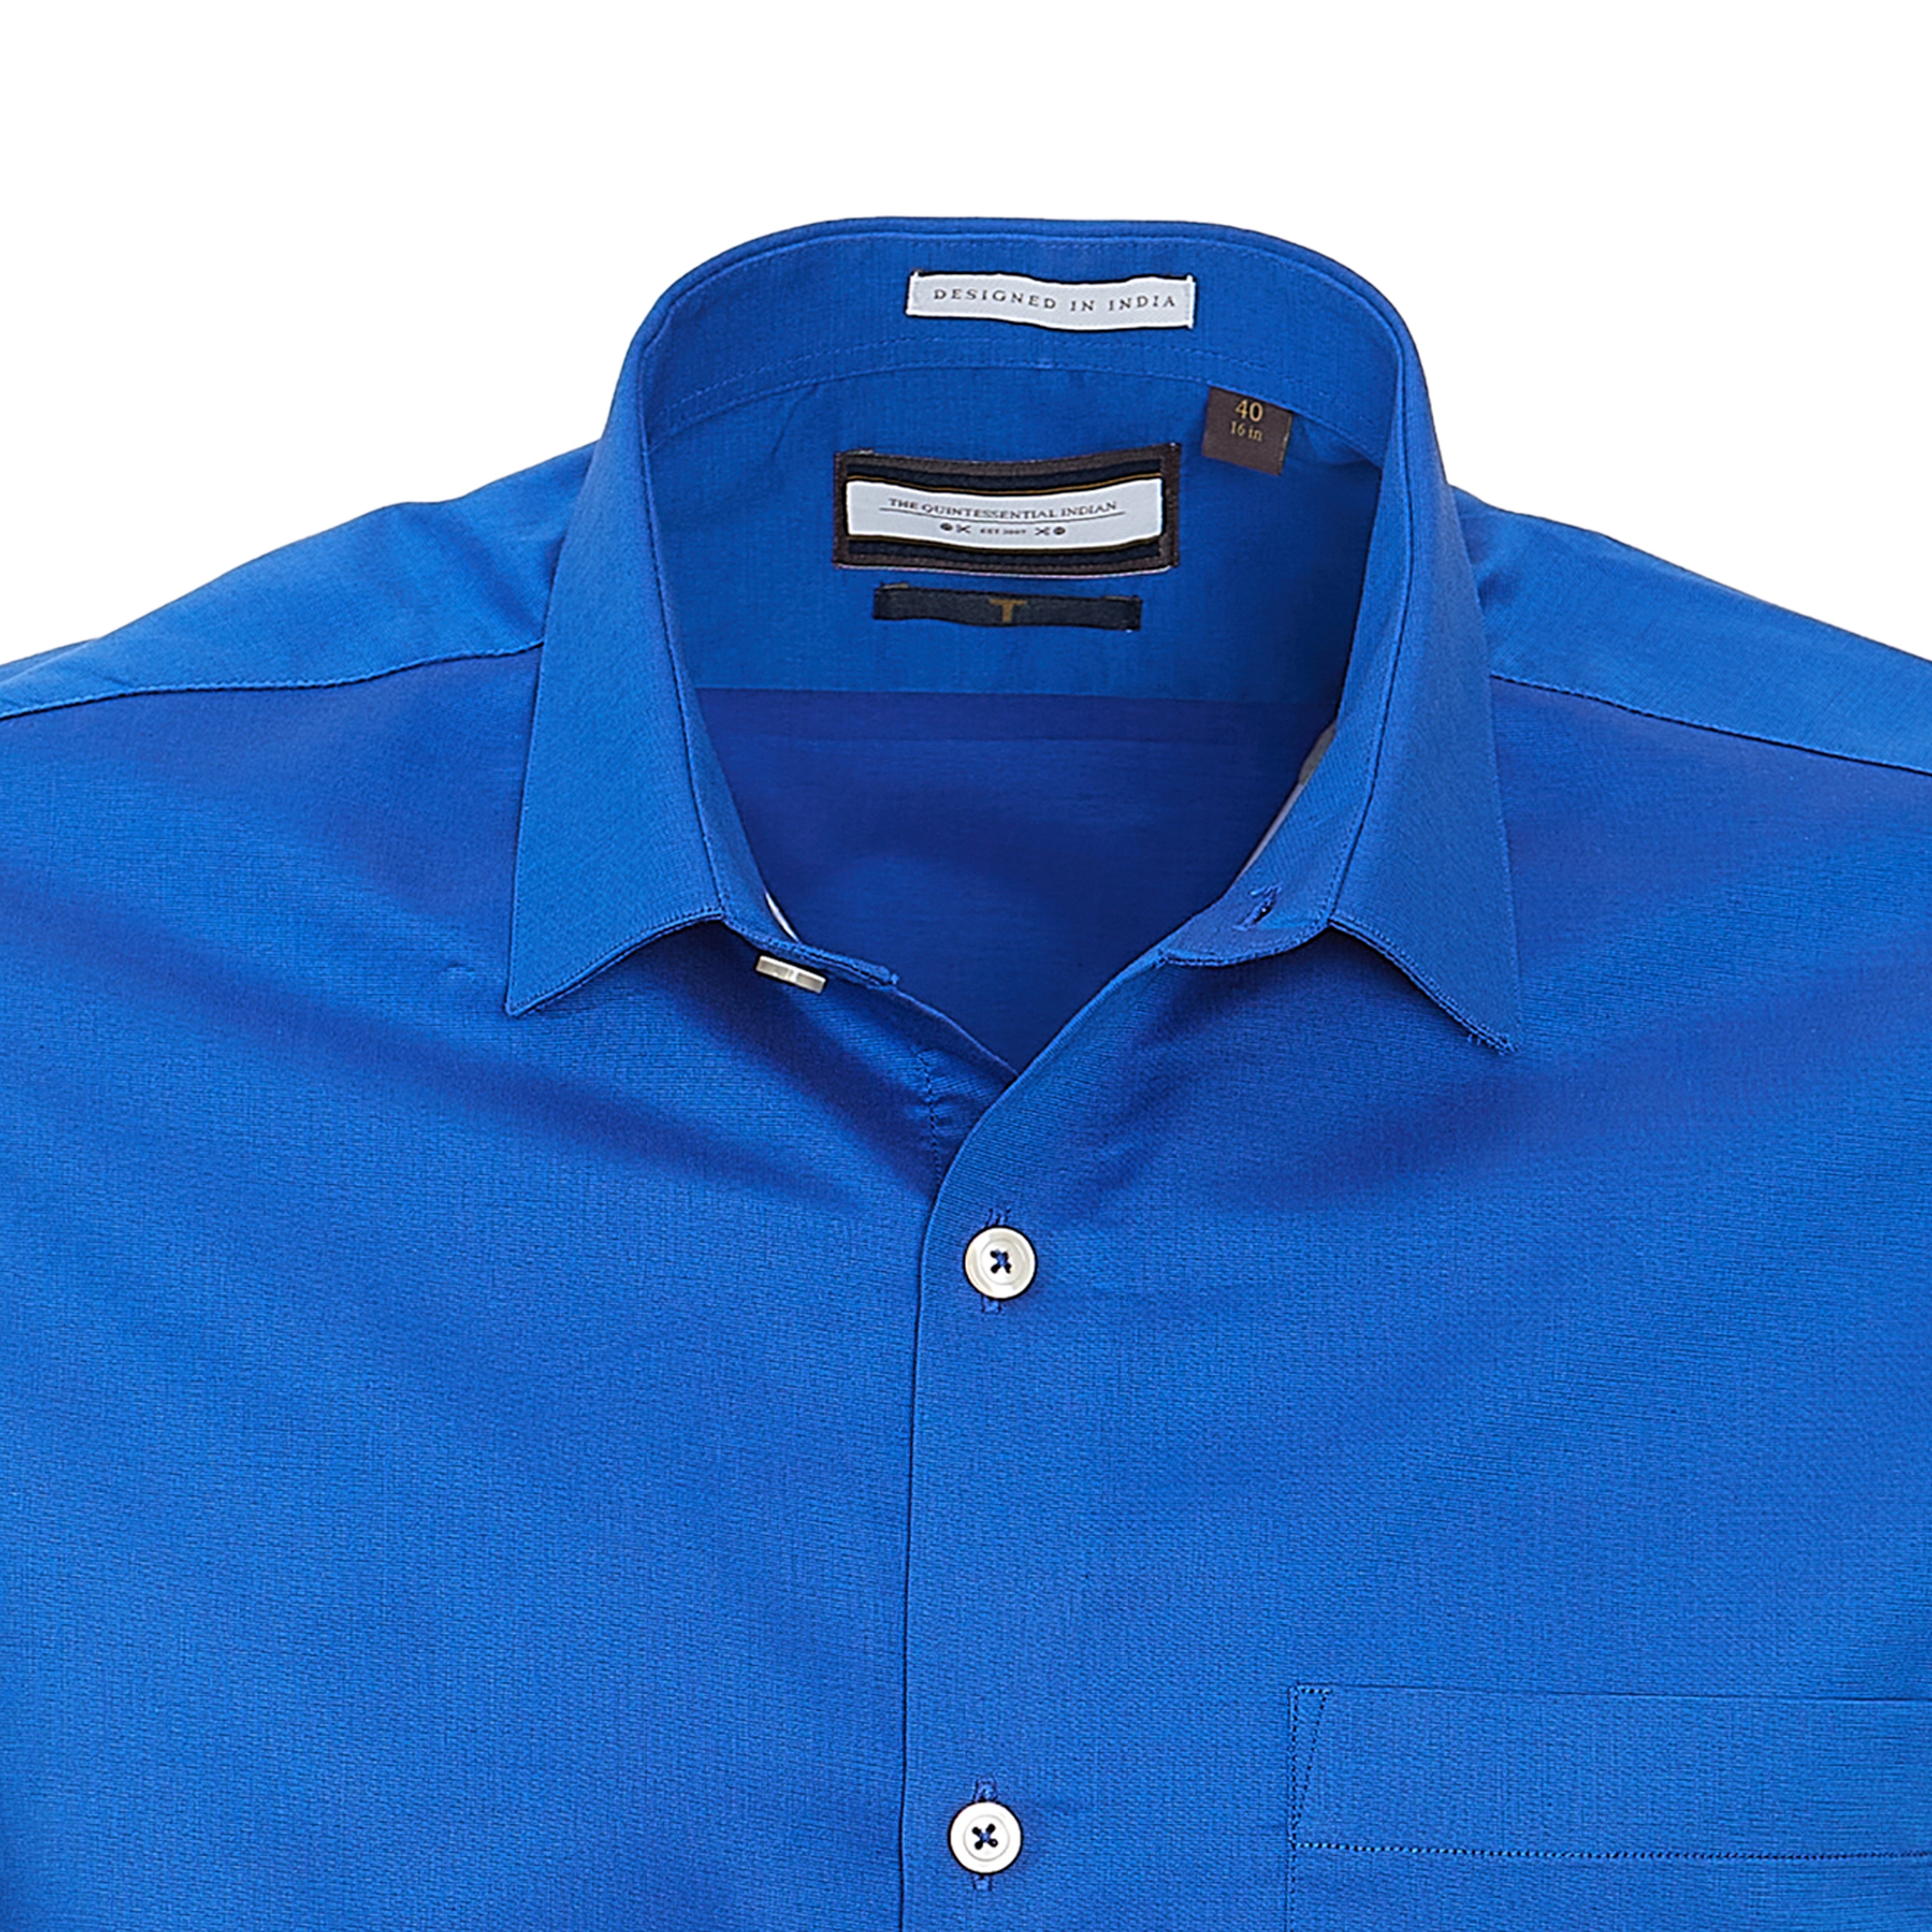 Supima Cotton Royal Blue Full-sleeved shirt